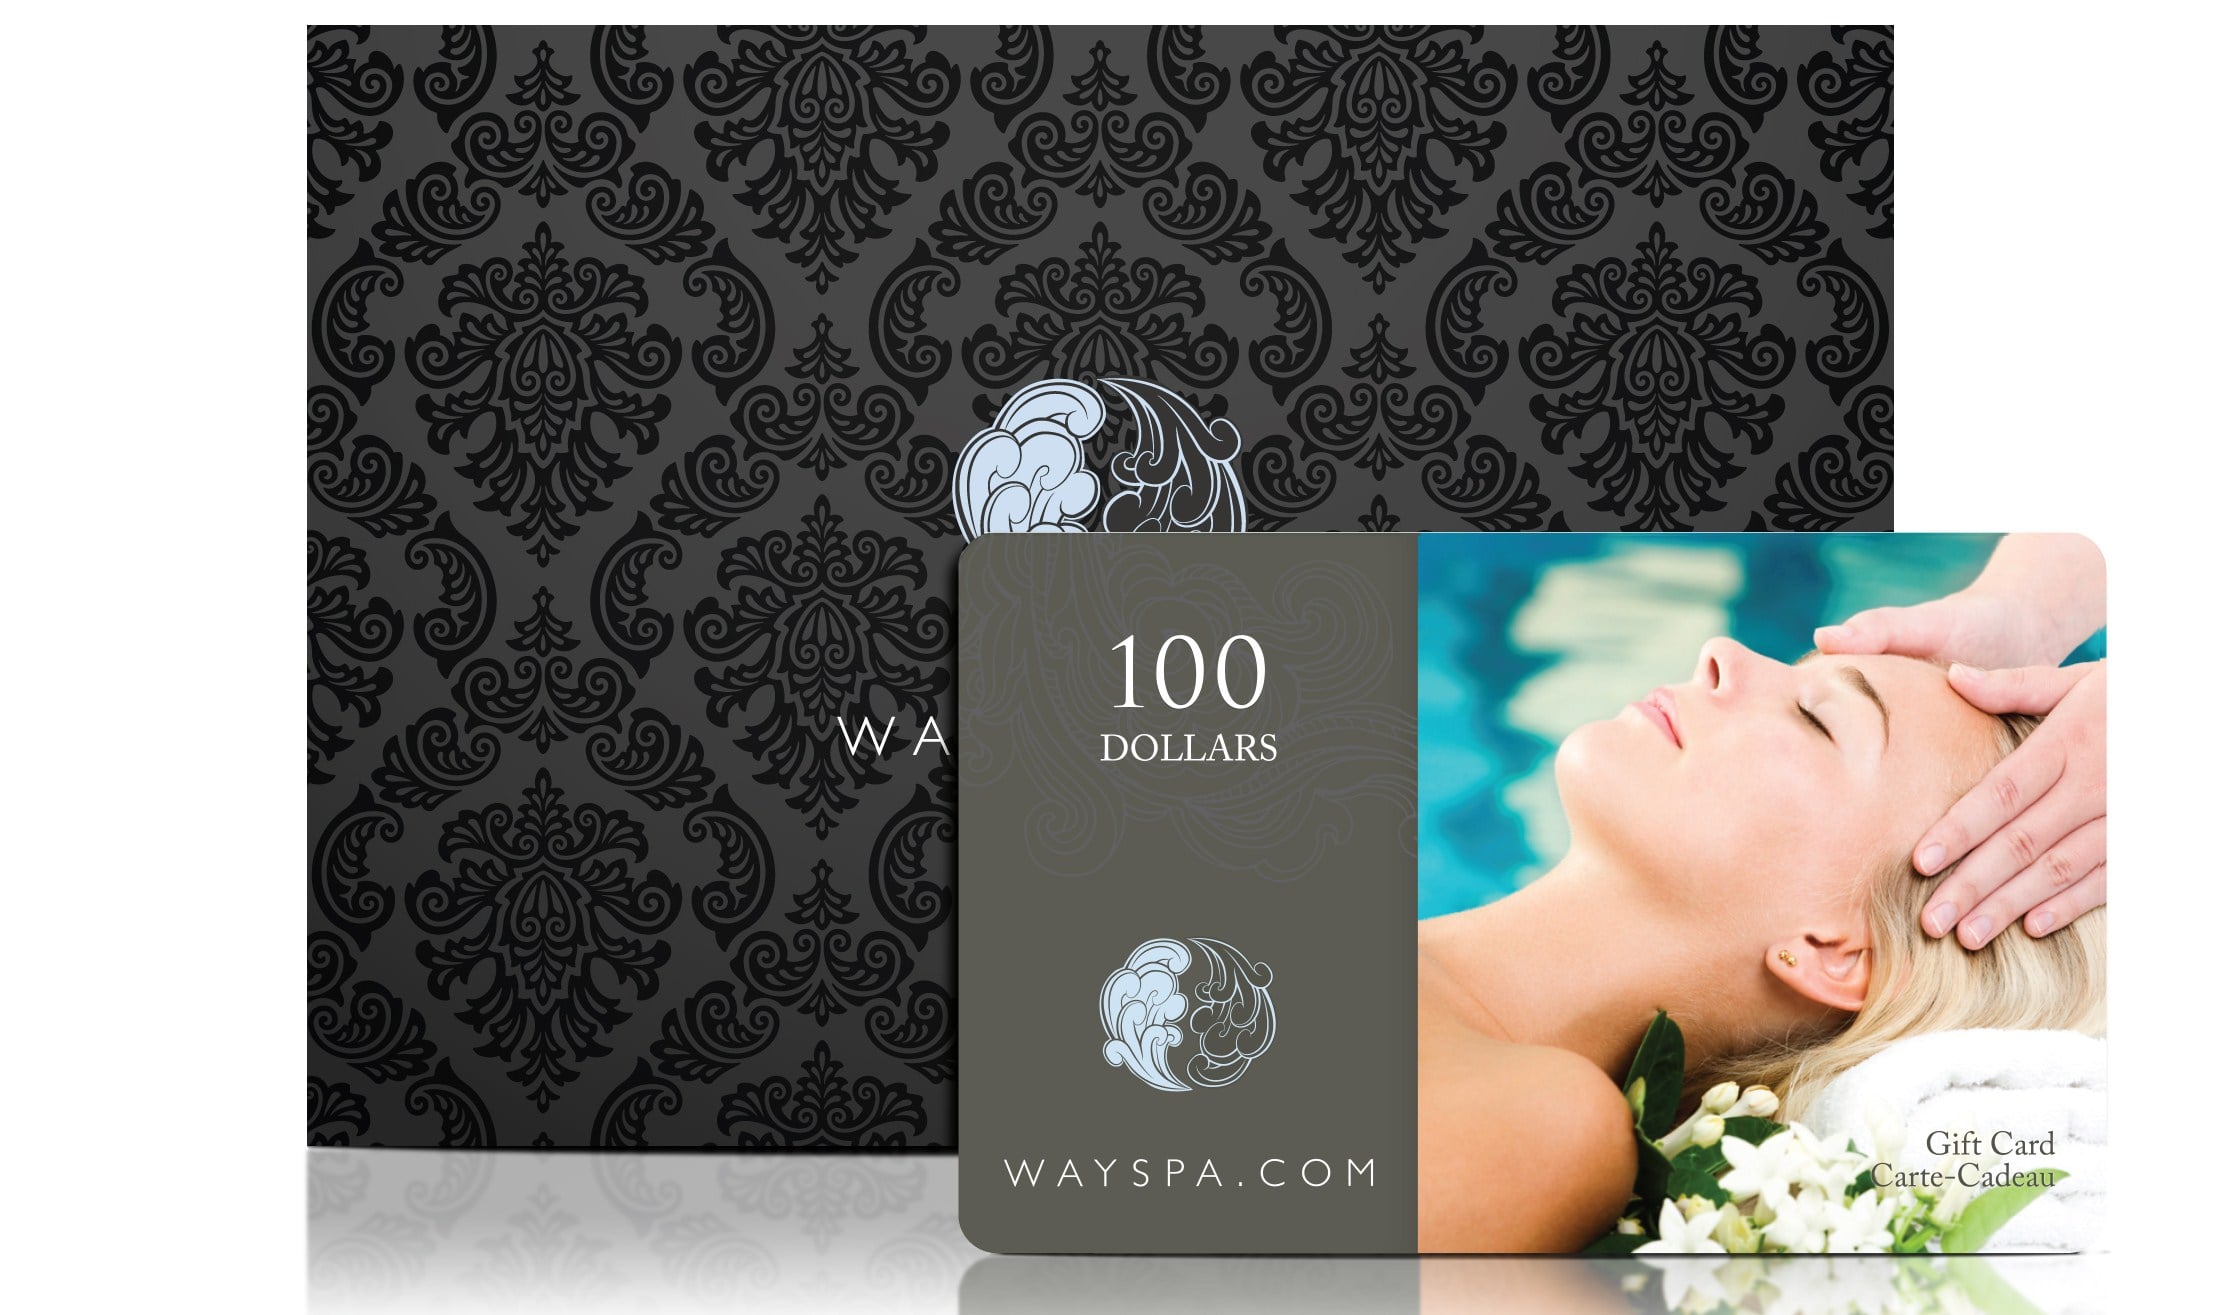 WaySpa Gift Card $100